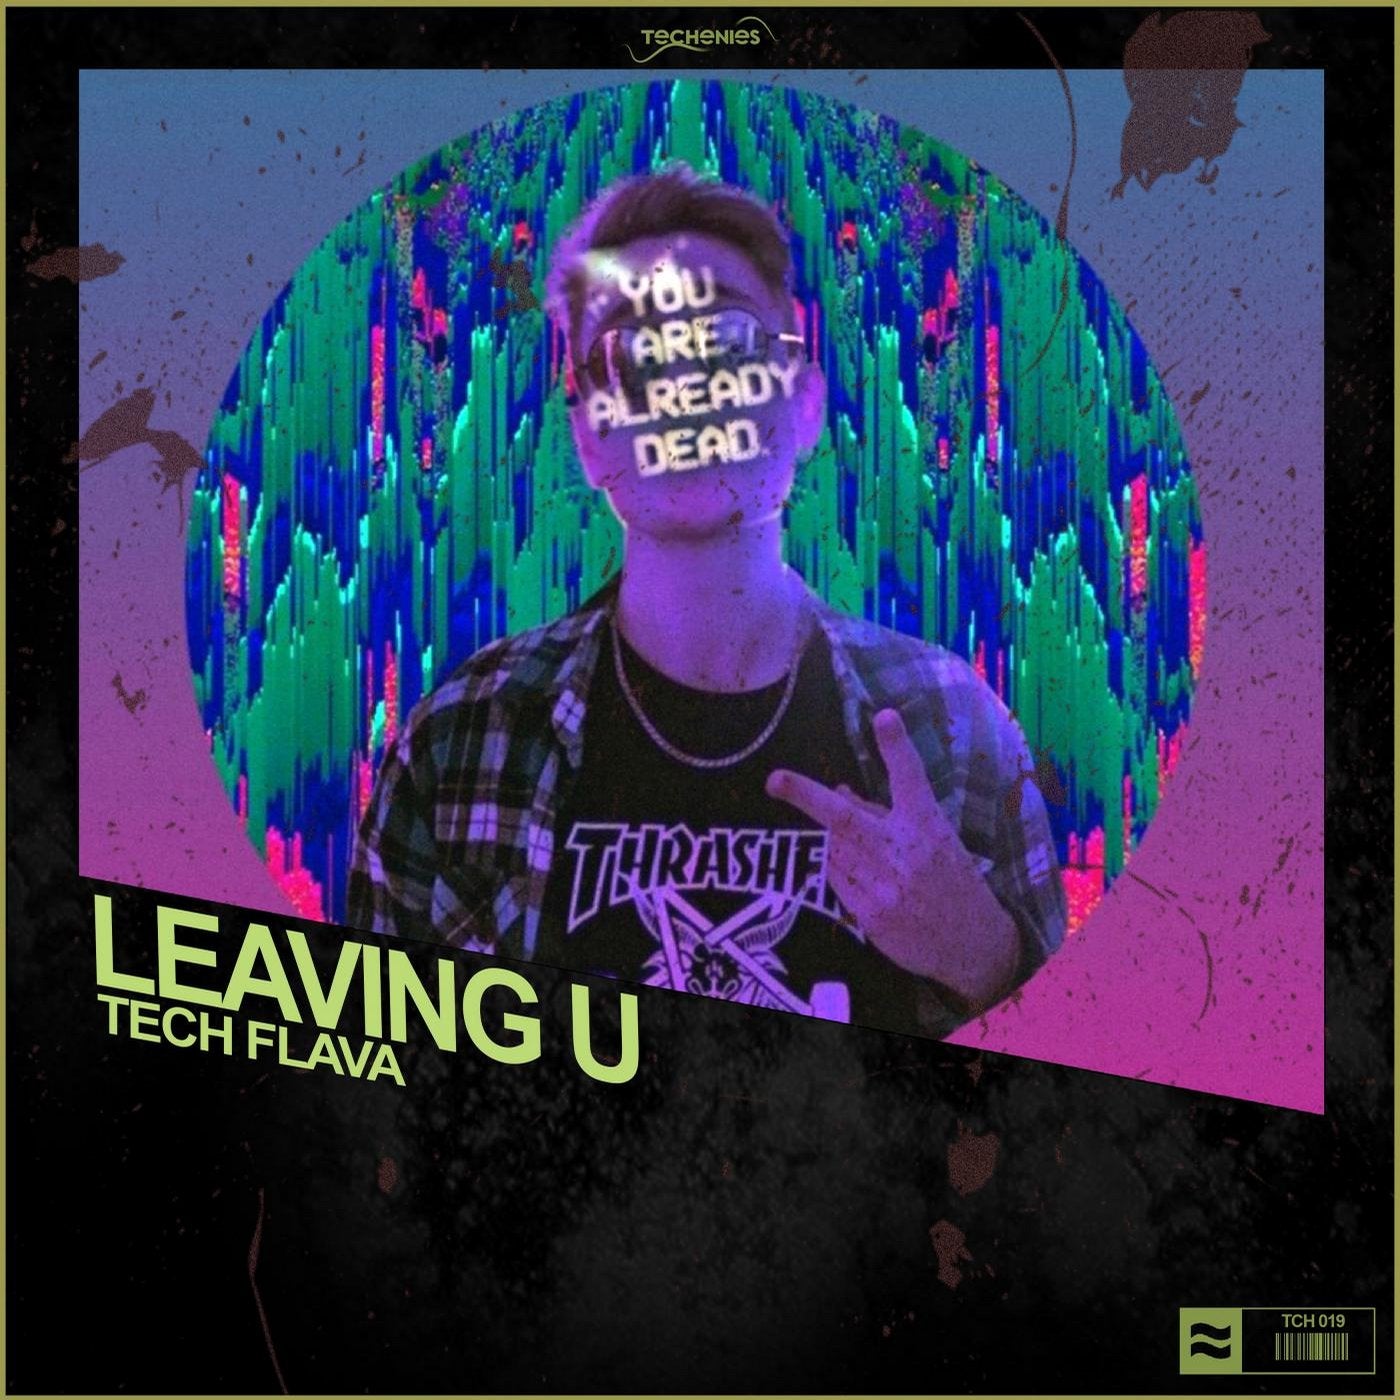 Leaving U